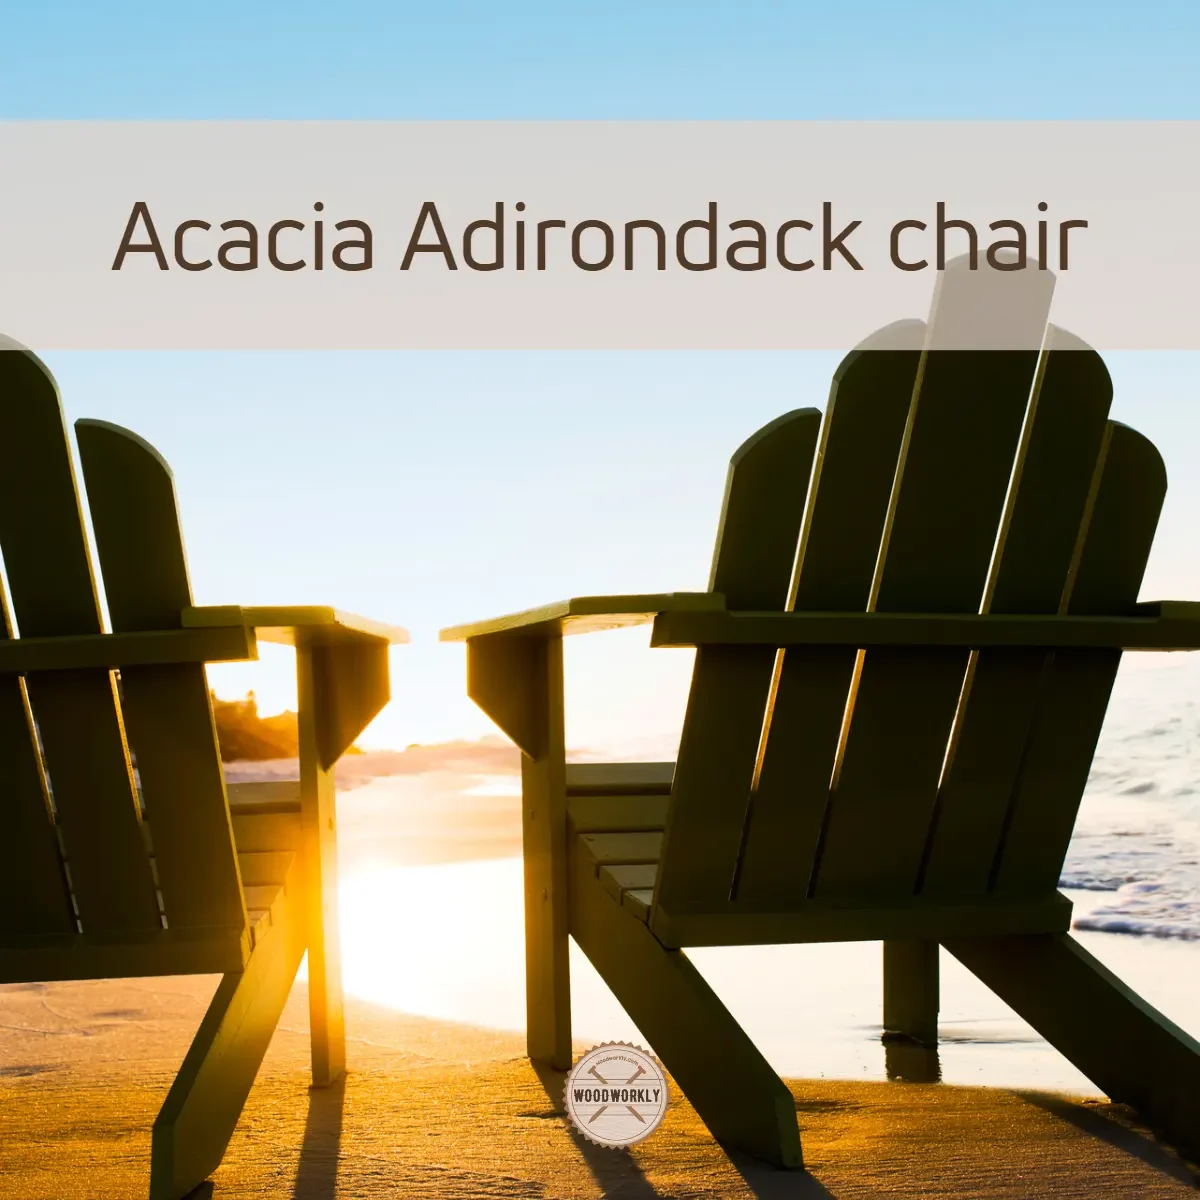 Acacia Adirondack chair